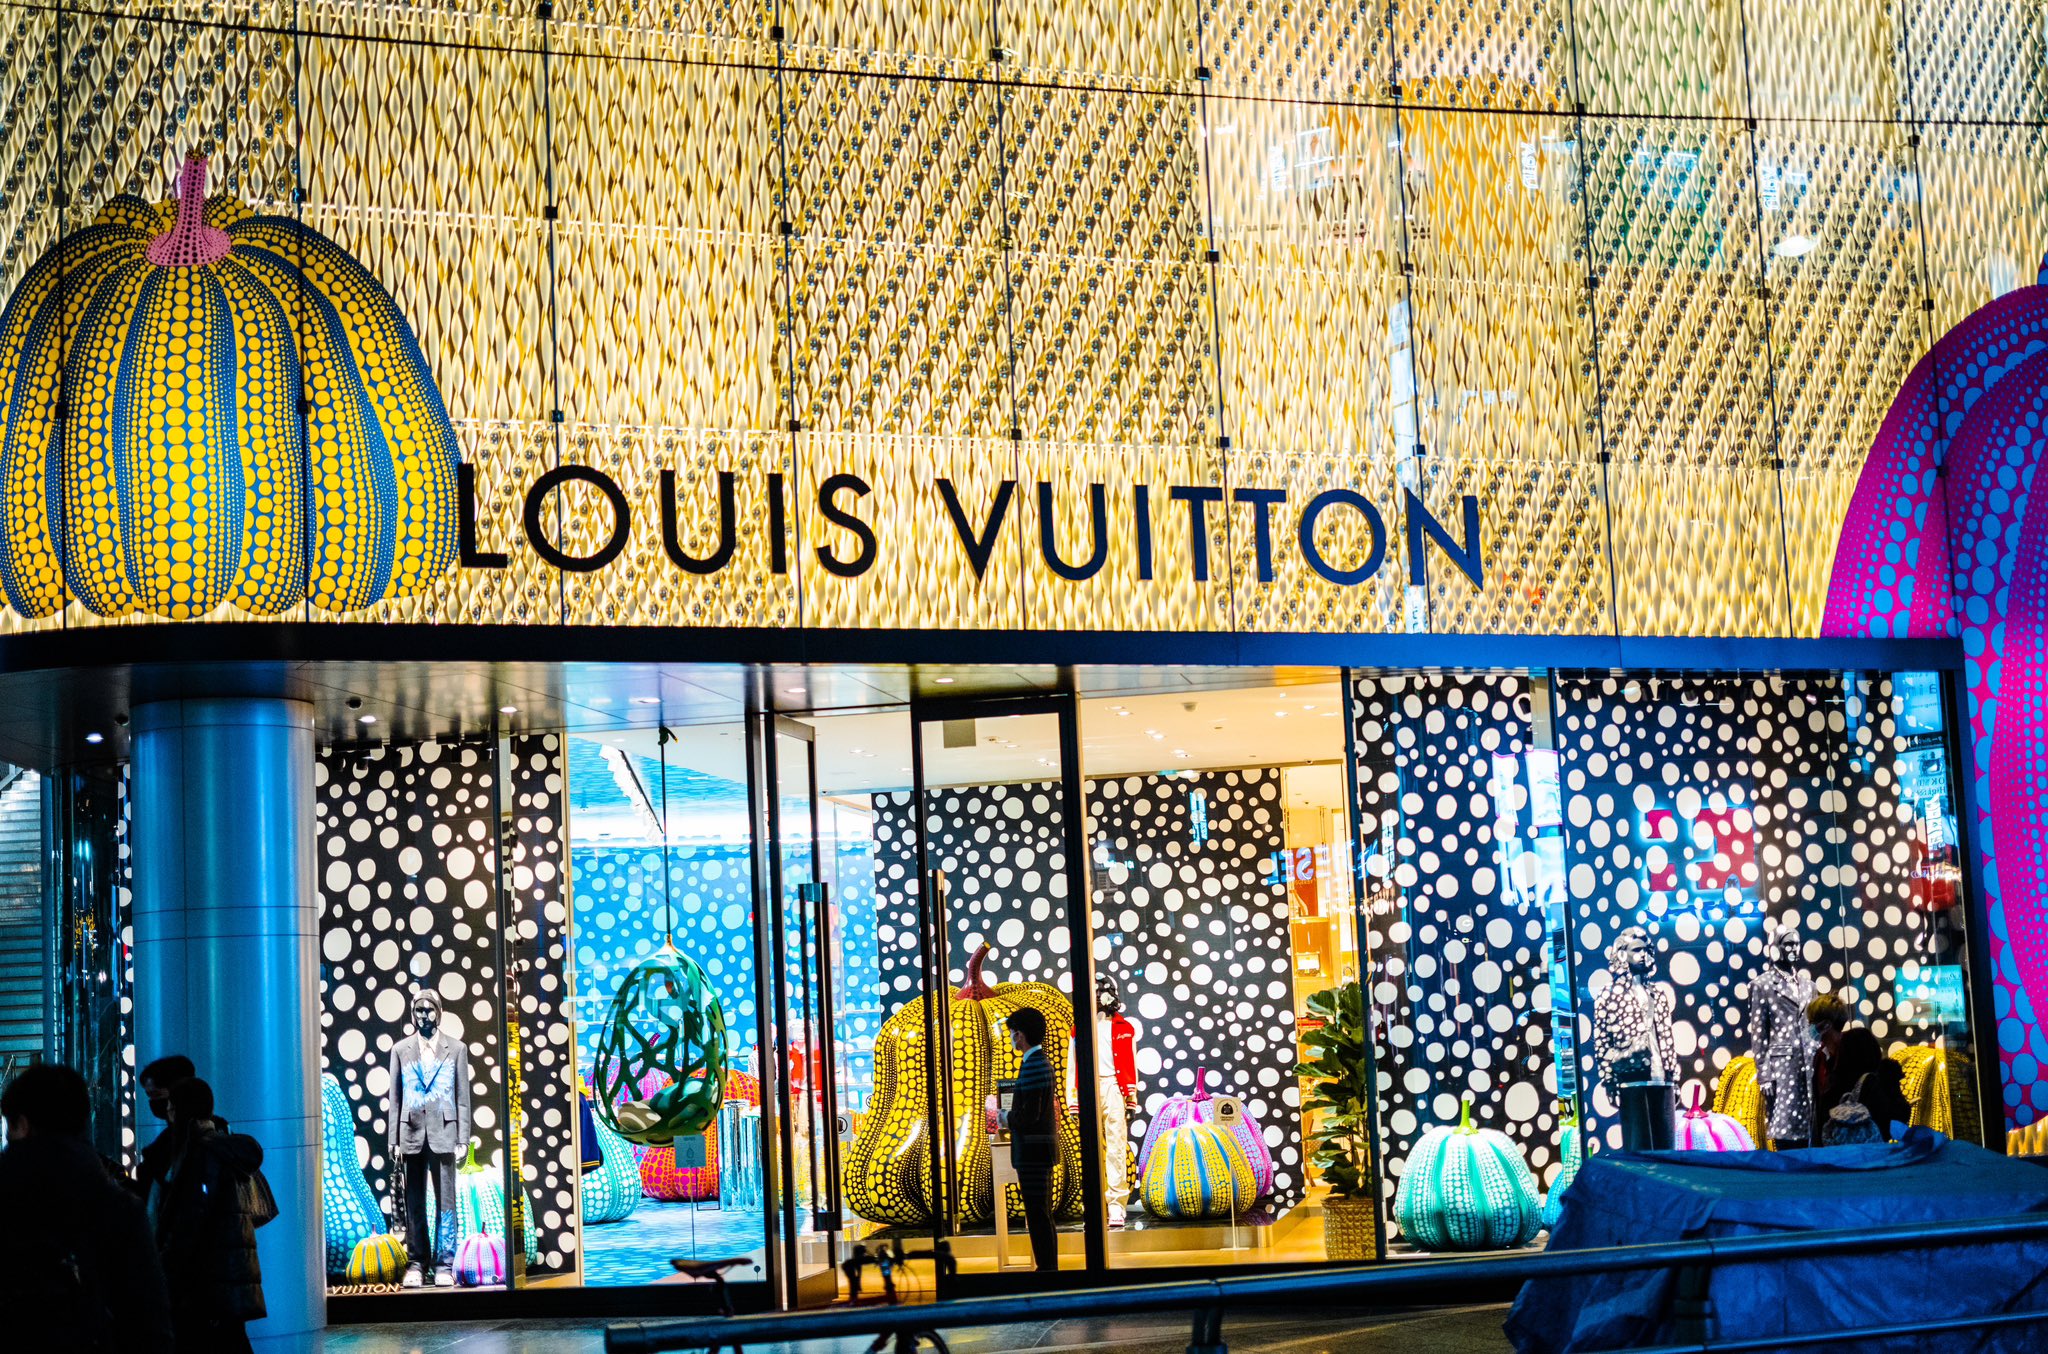 Louis Vuitton, Brands of the World™